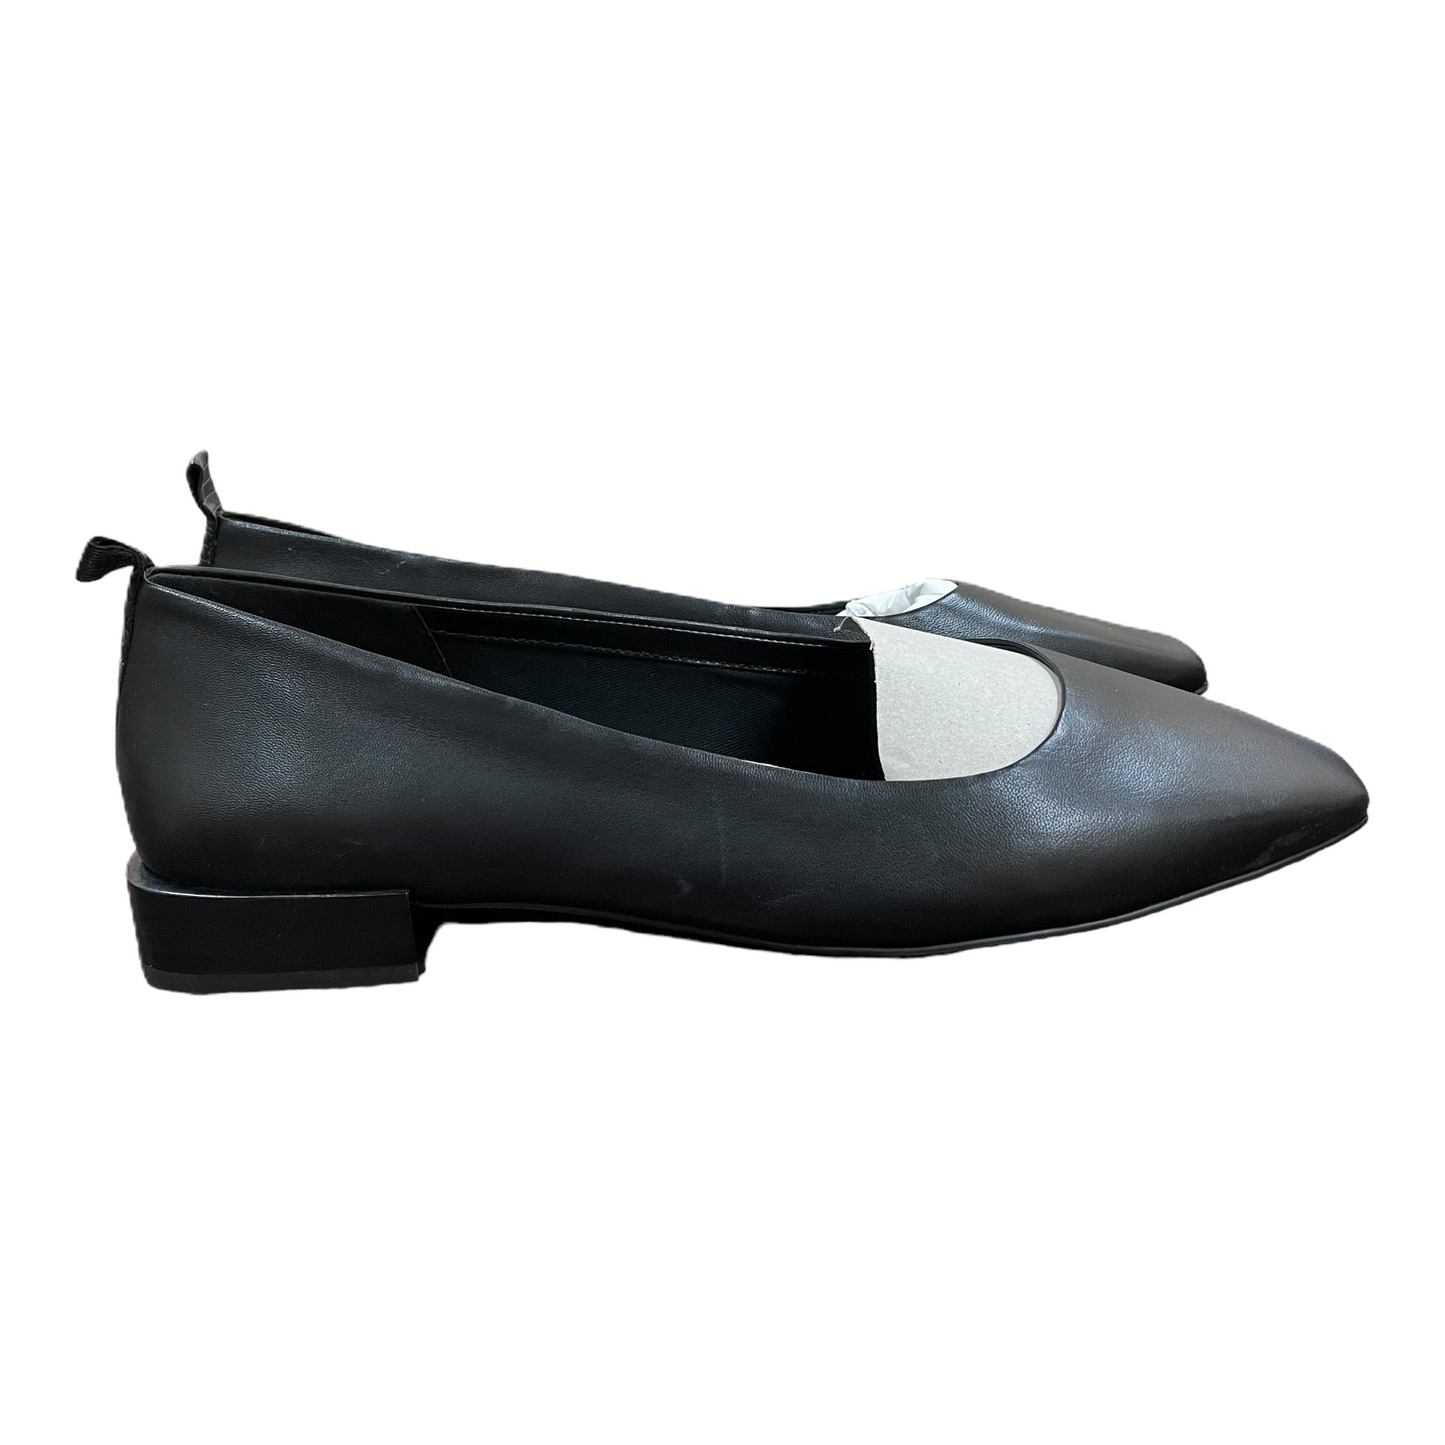 Black Shoes Flats By essex lane Size: 11